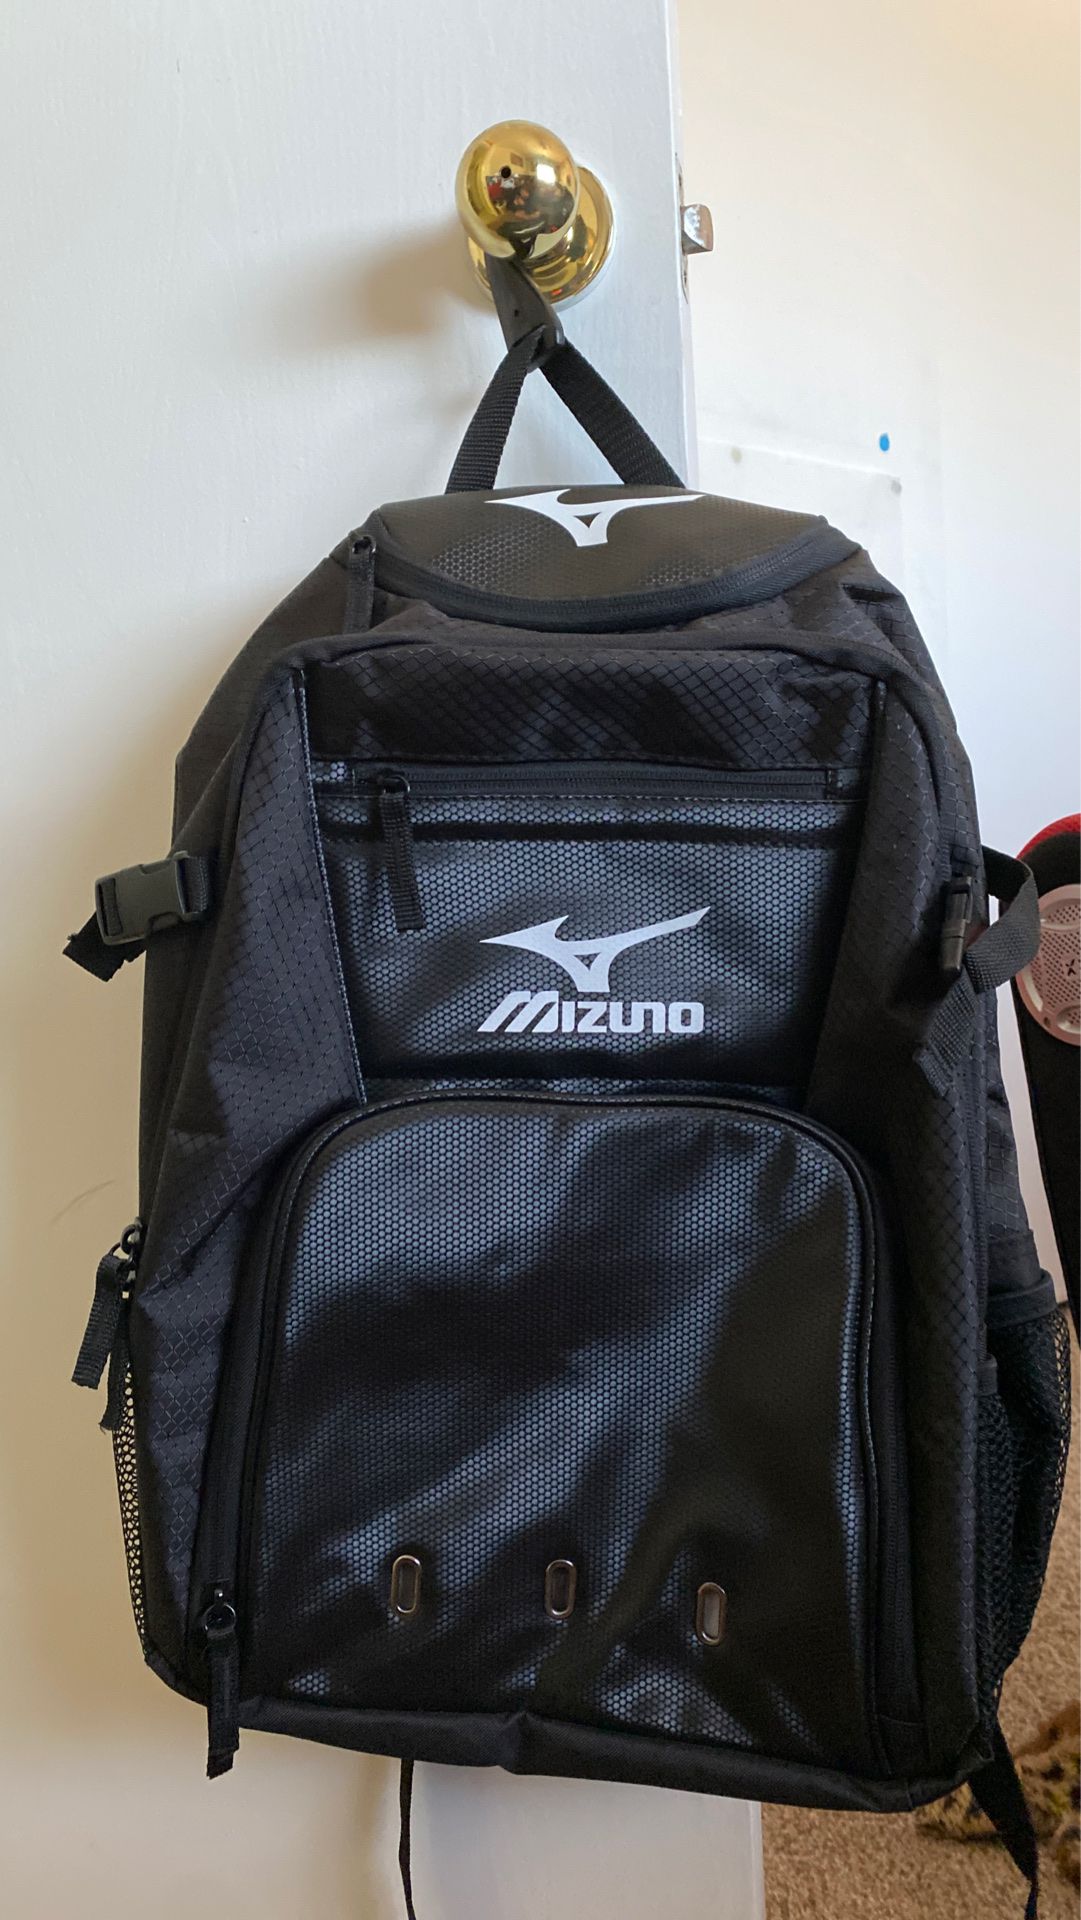 Mizuno baseball backpack